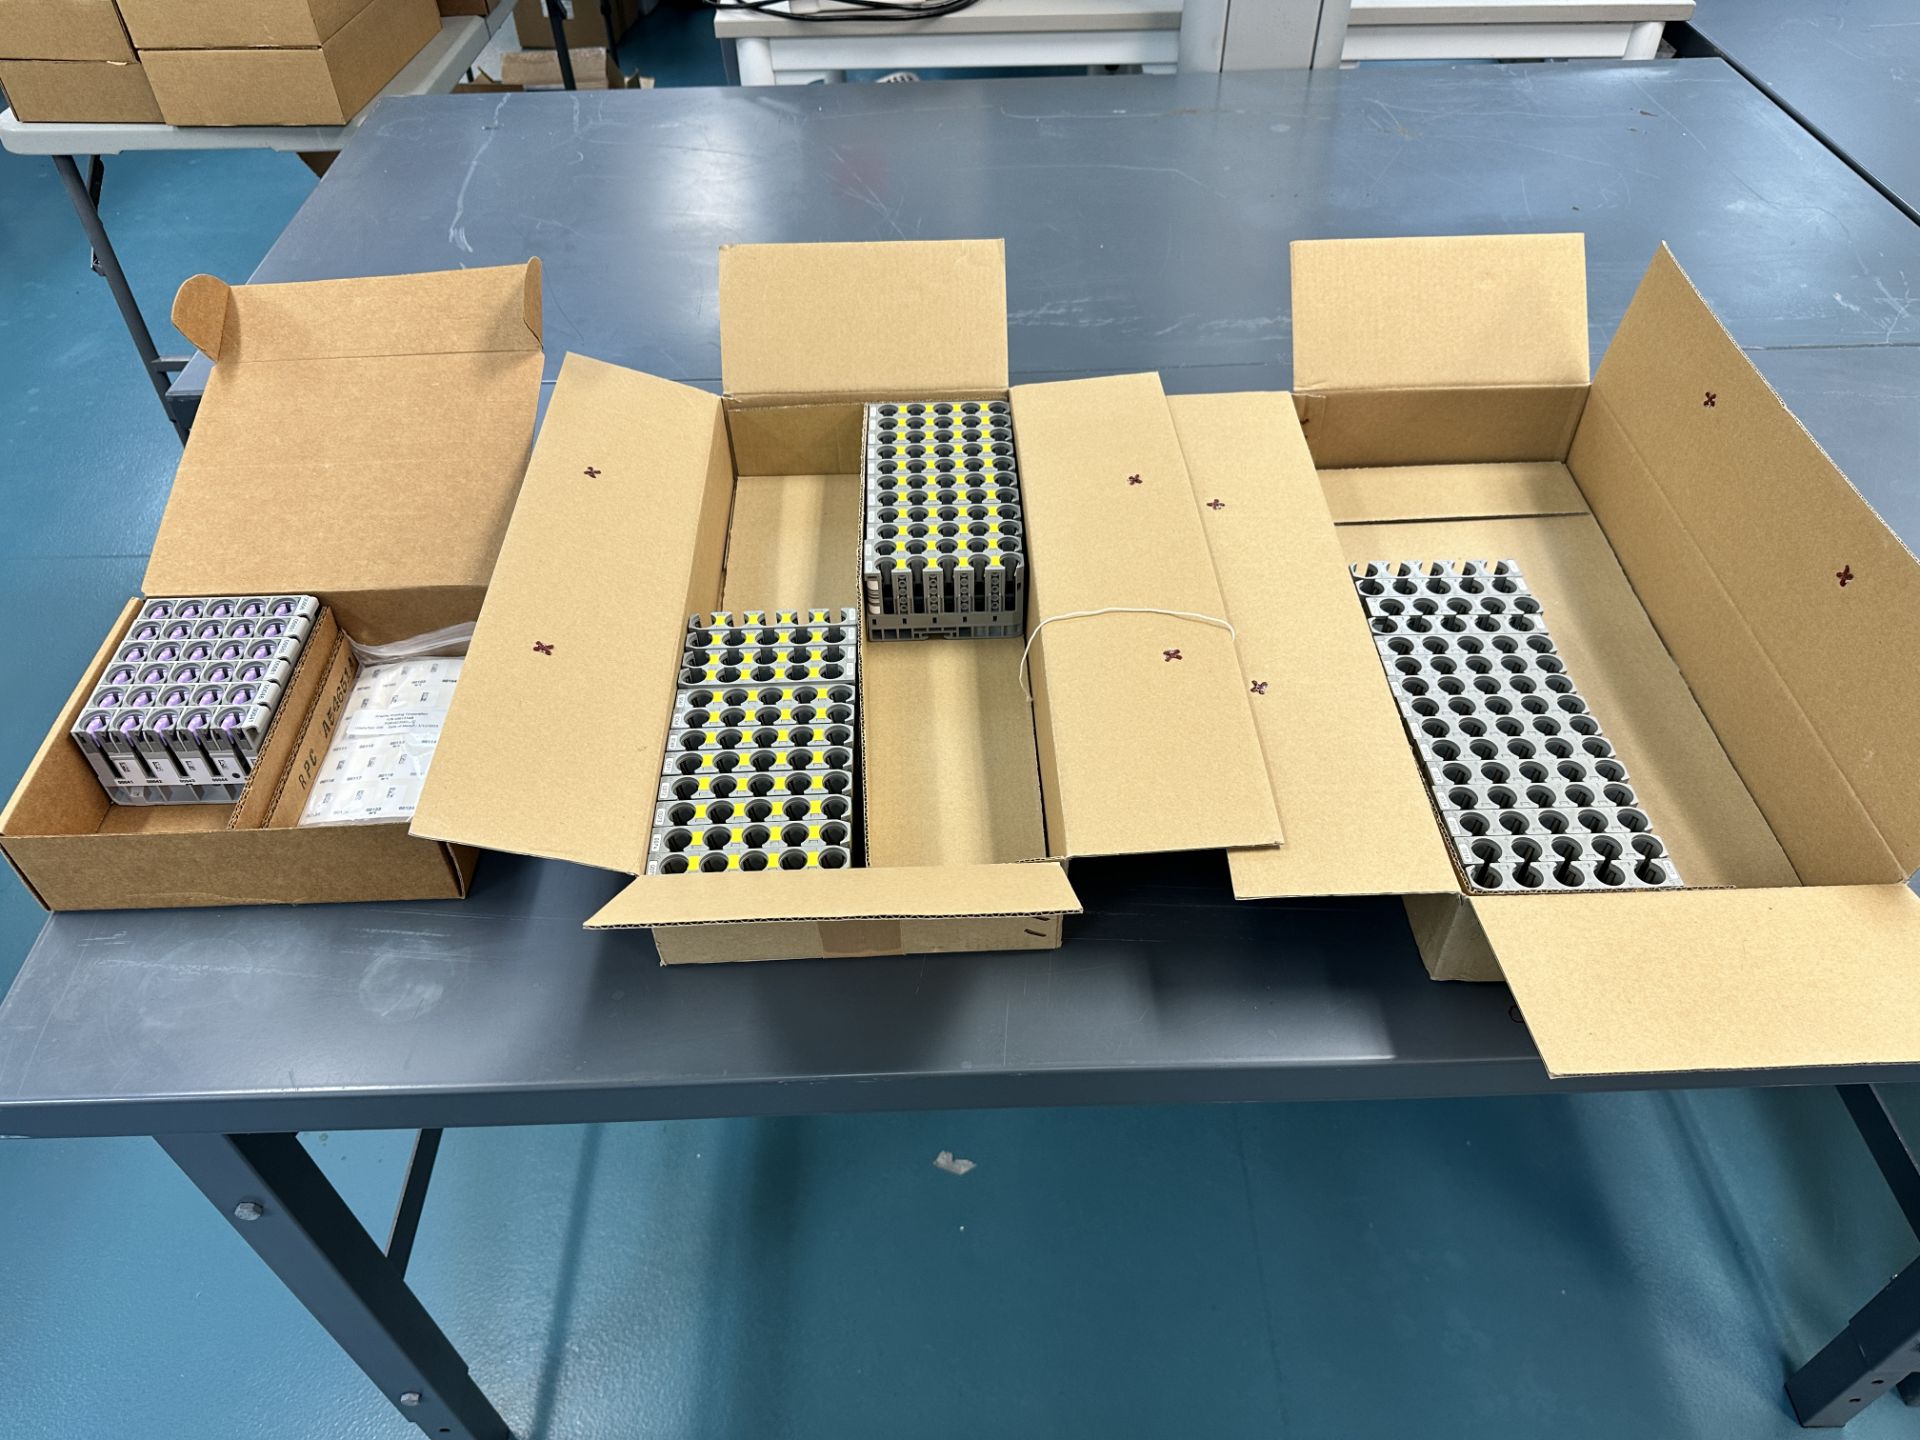 Cobas Analyzer Sample Tube Racks and Type A Cassette, DXH (Qty 44)